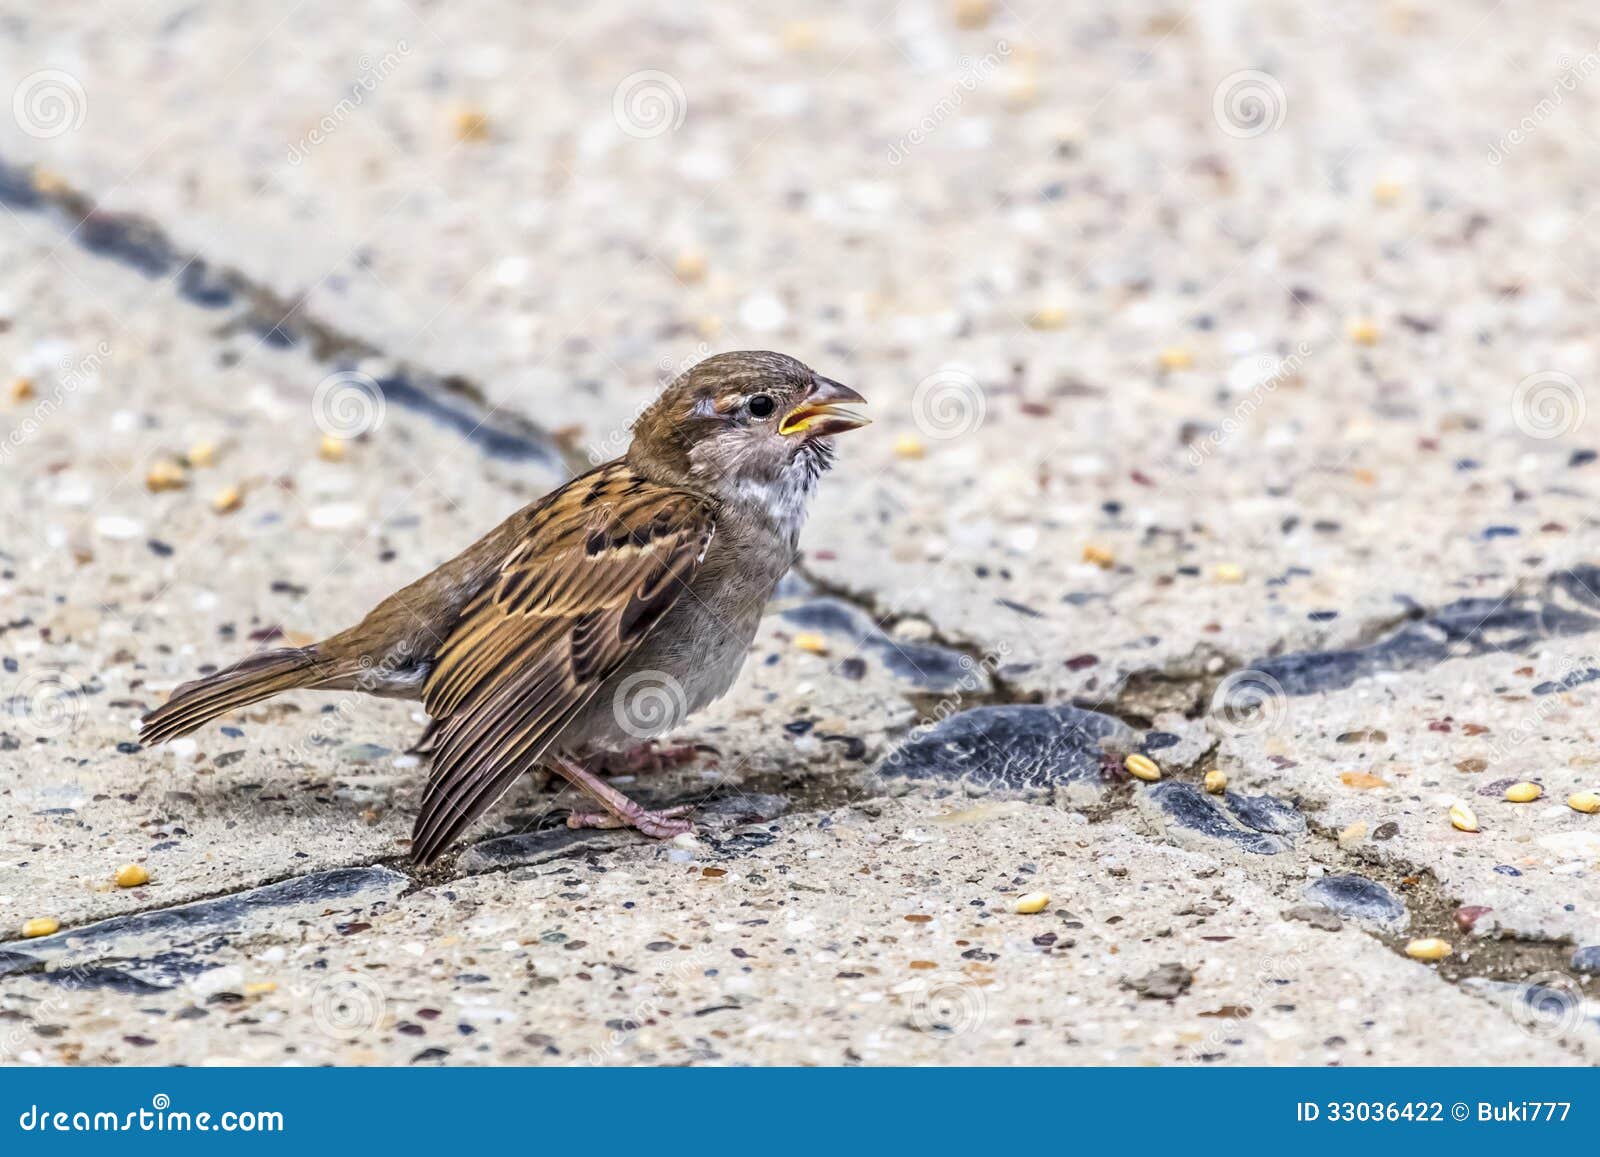 youngling yellow beak sparrow injured wing crossro photograph crossroads 33036422